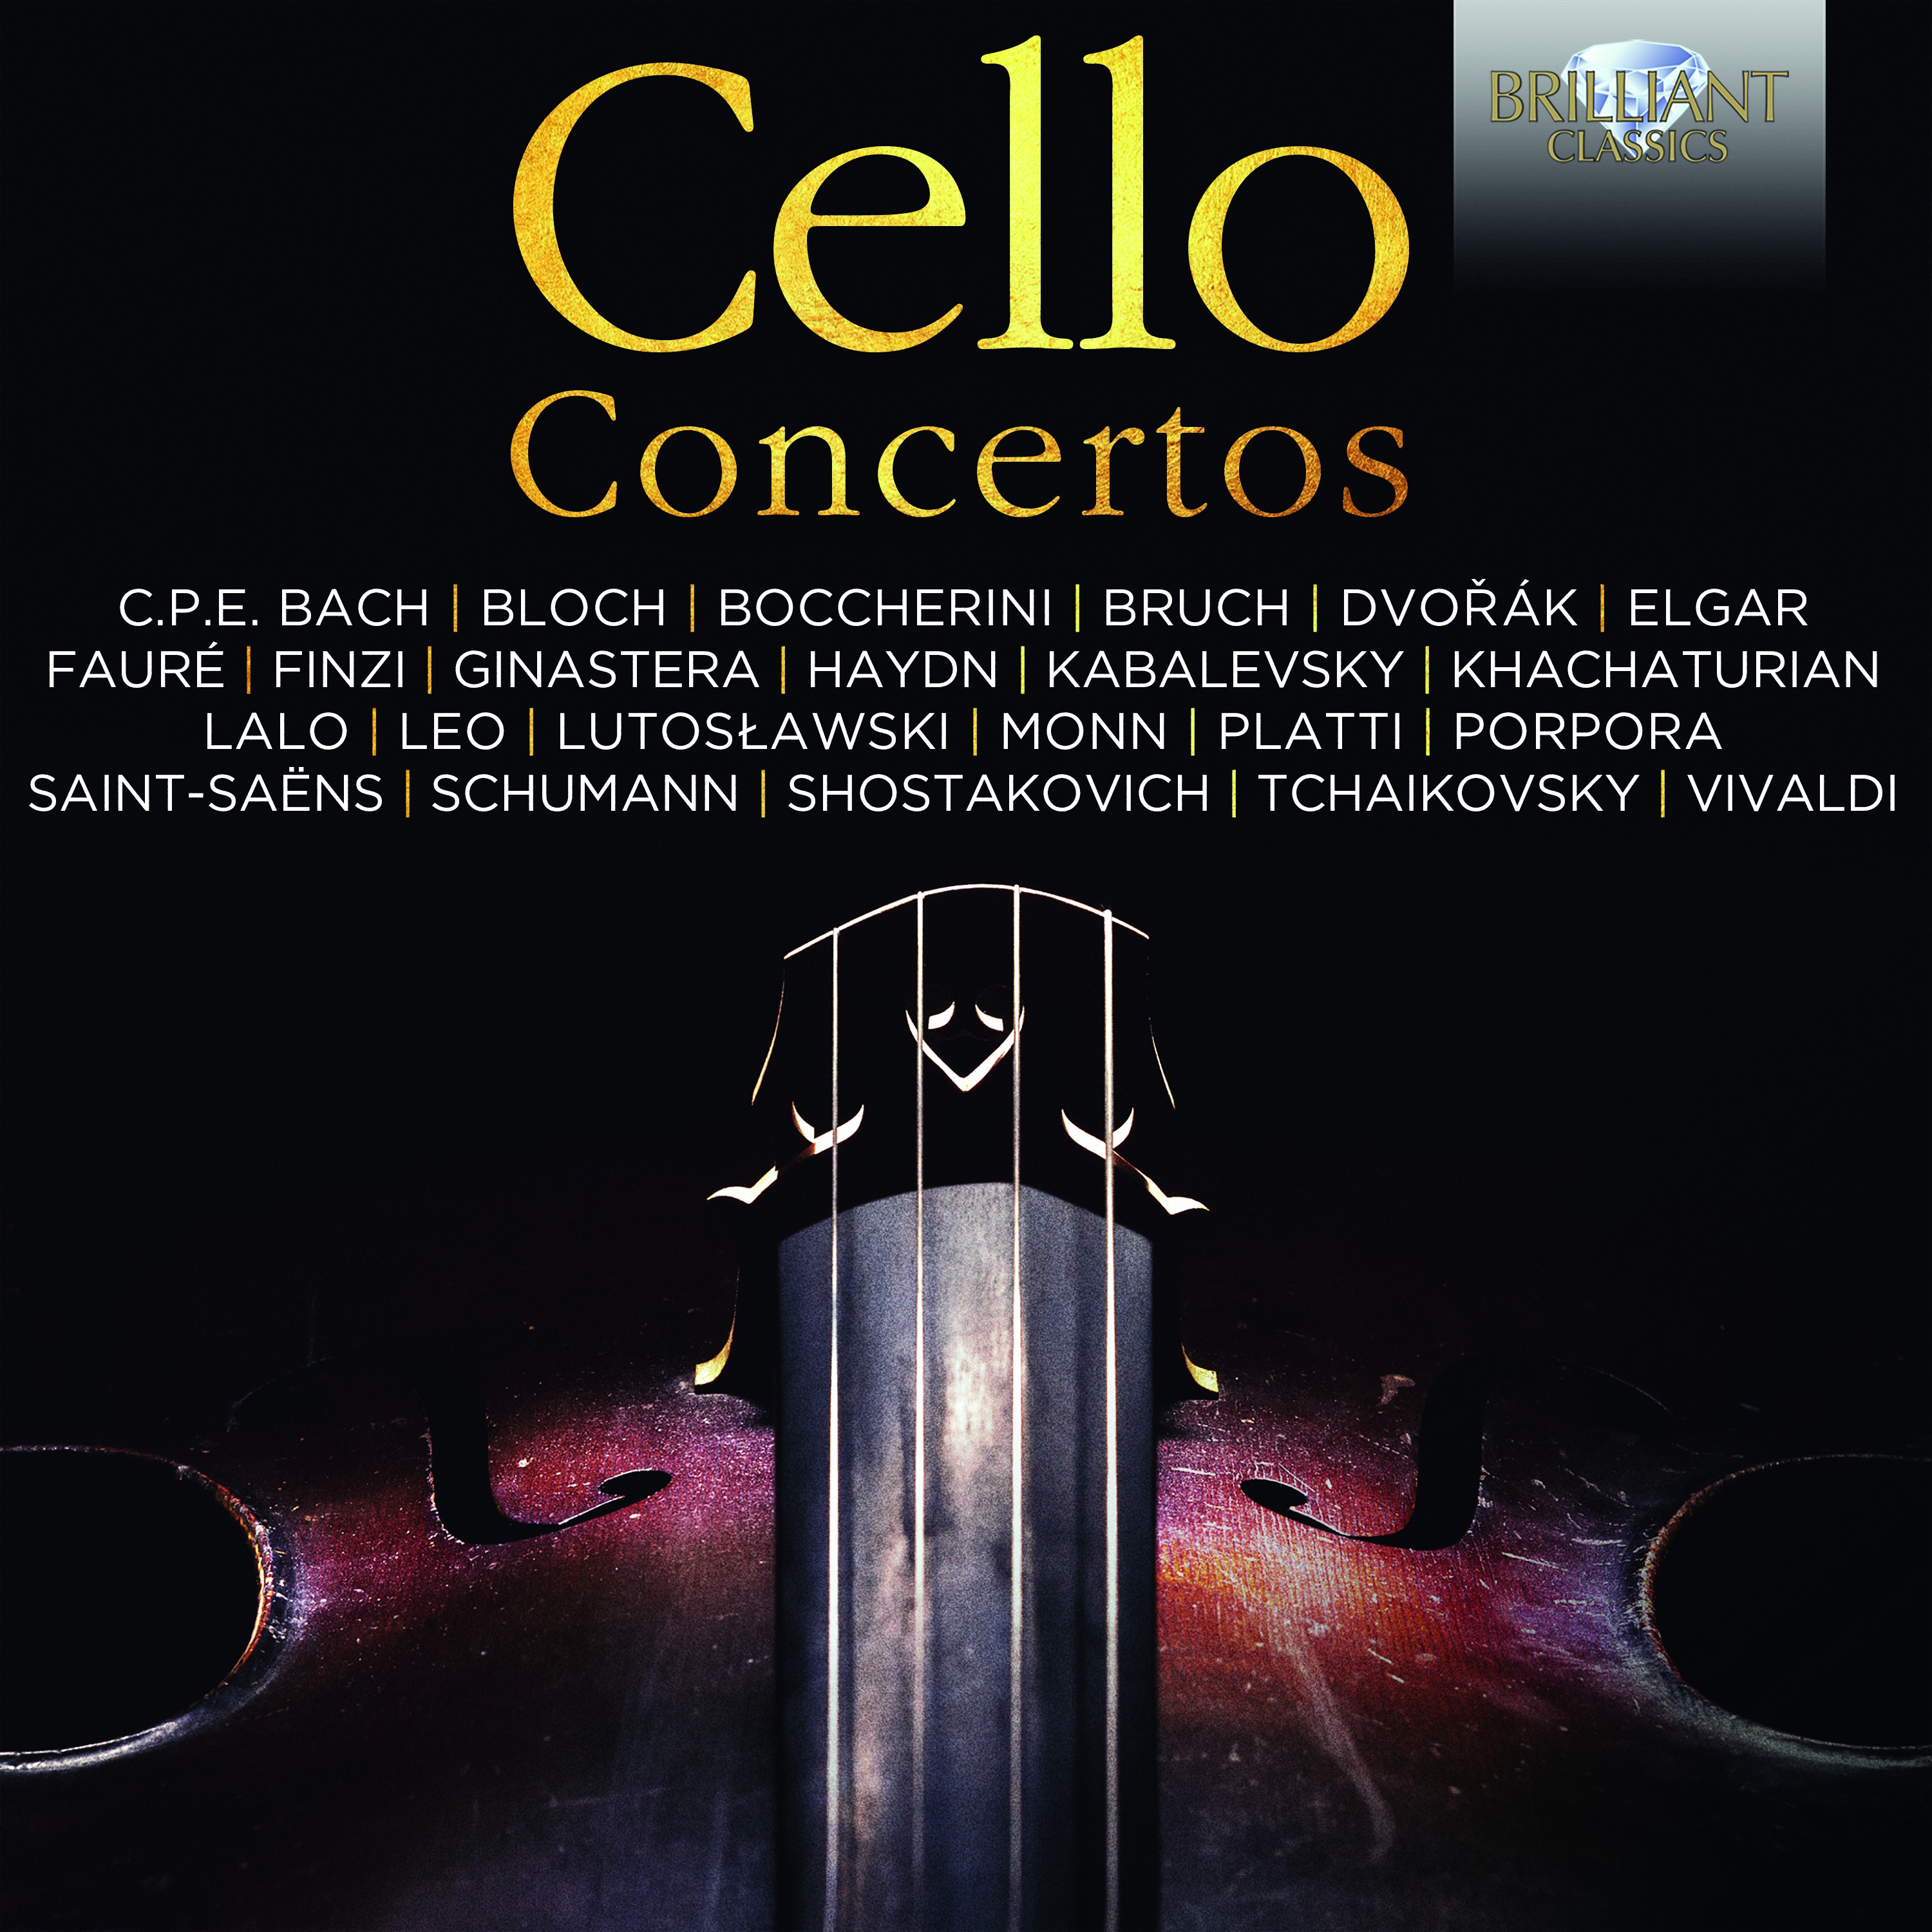 Cello Concerto in D Minor: III. Introduction. Andante - Allegro vivace